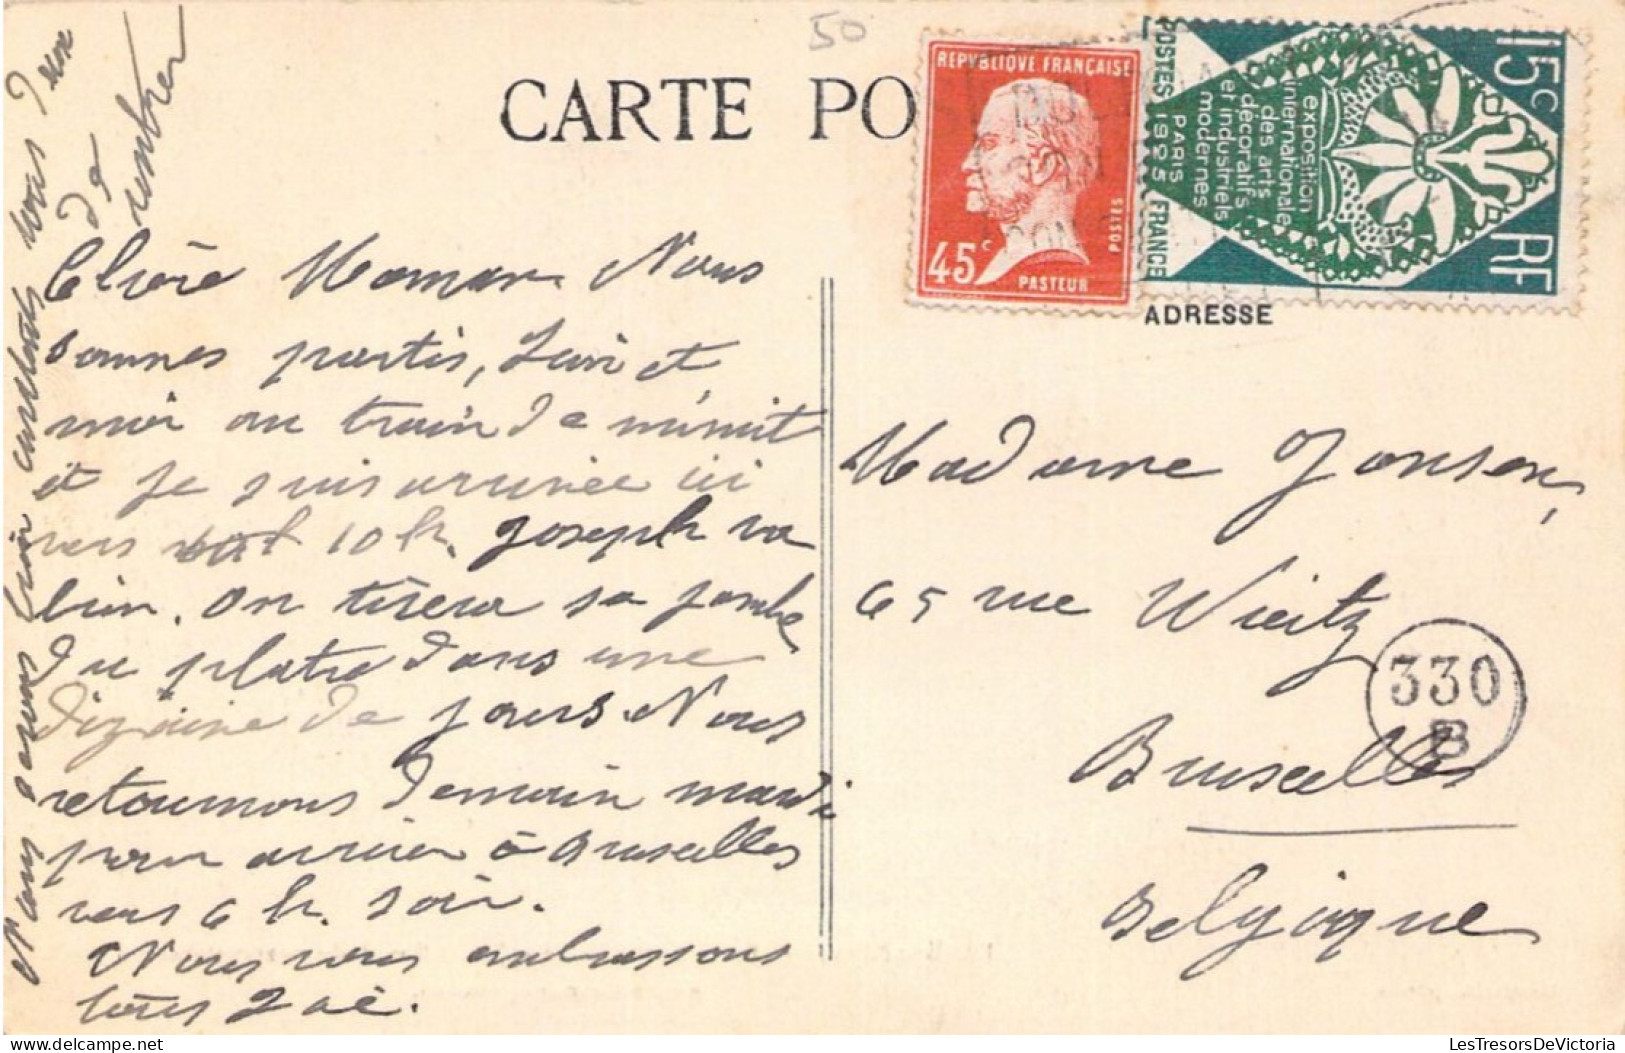 FRANCE - 91 - DOURDAN - Salle Haute Du Donjon - Carte Postale Ancienne - Dourdan